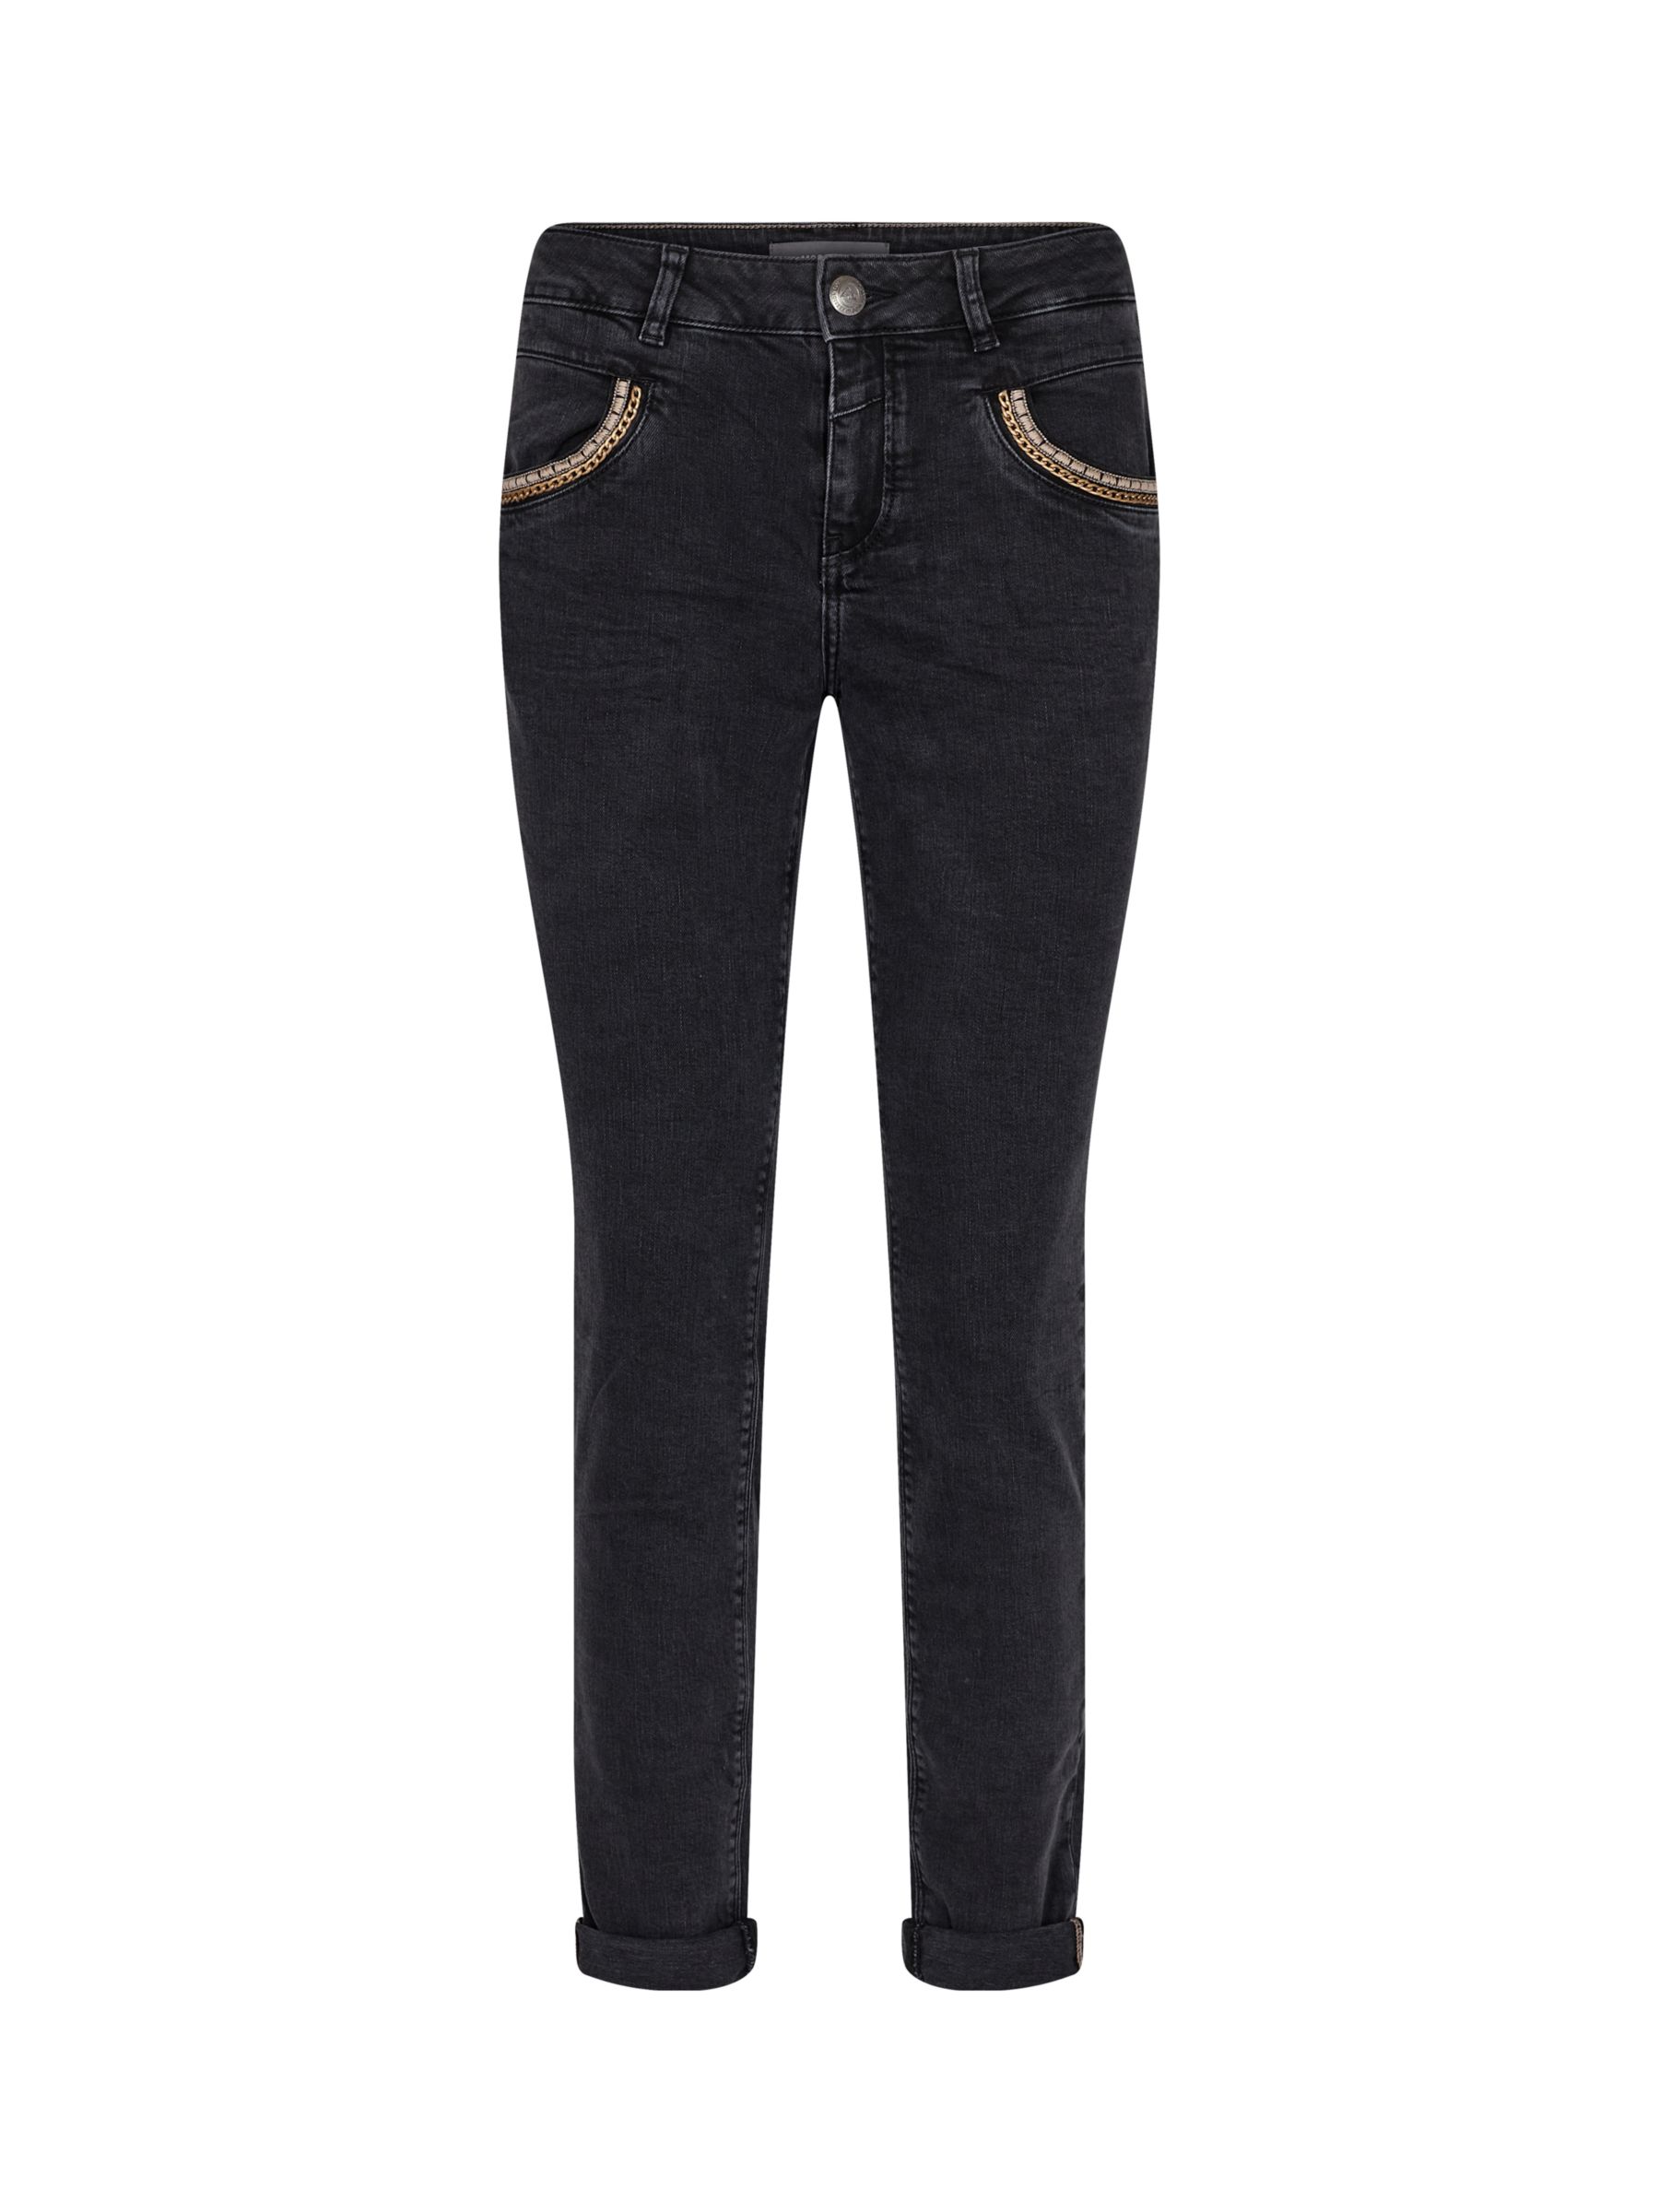 MOS MOSH Naomi Gringlo Mid Rise Regular Jeans, Dark Grey, 26R